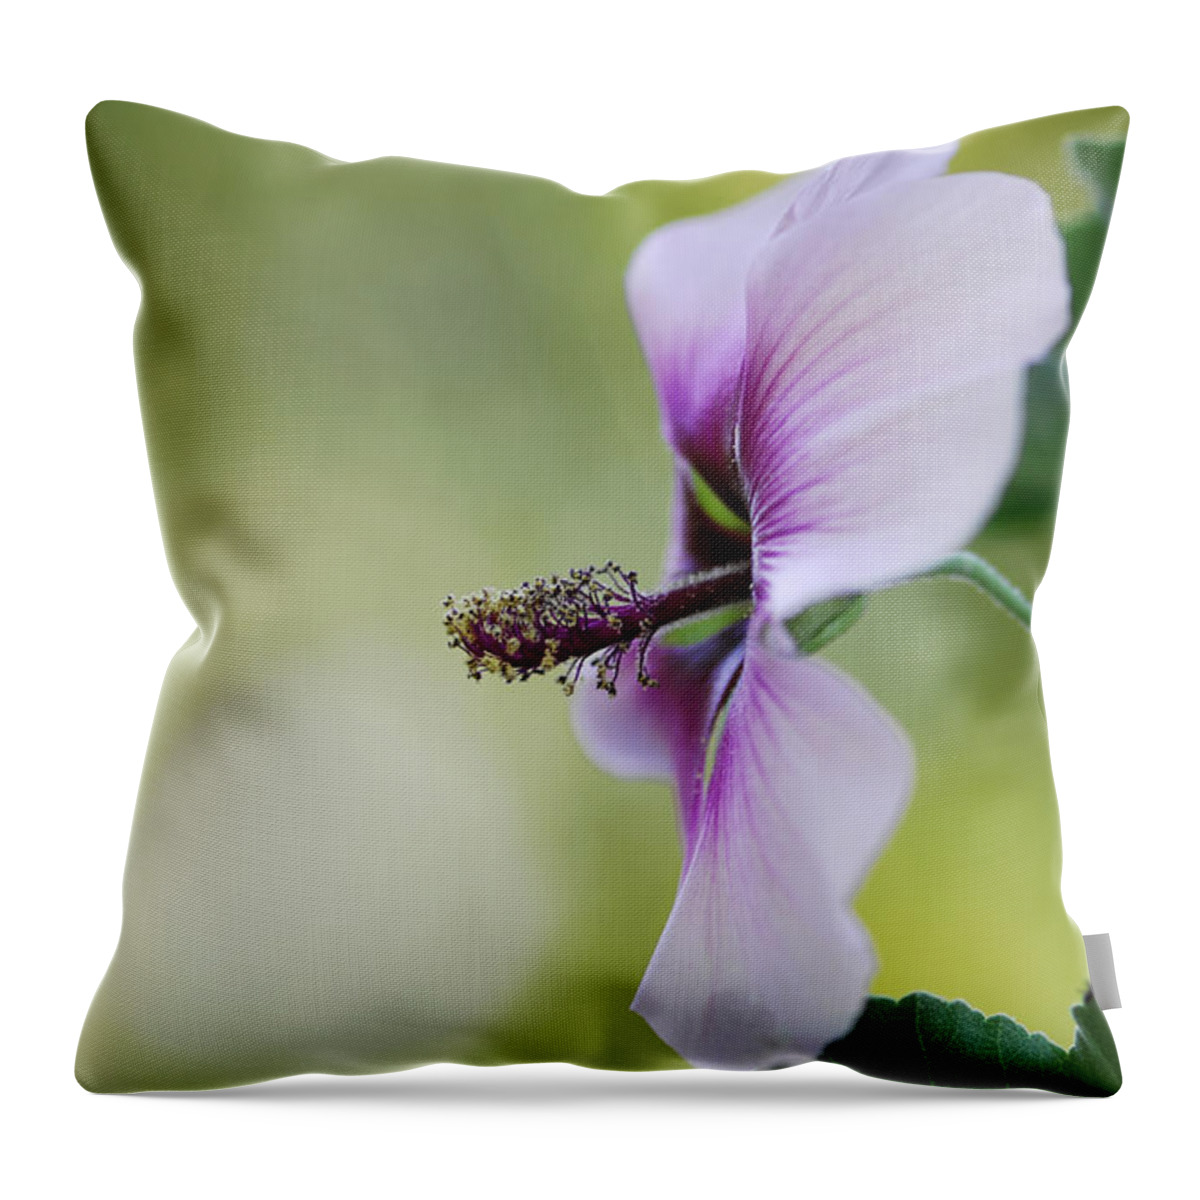 Flower Throw Pillow featuring the photograph Splendor by Donna Blackhall